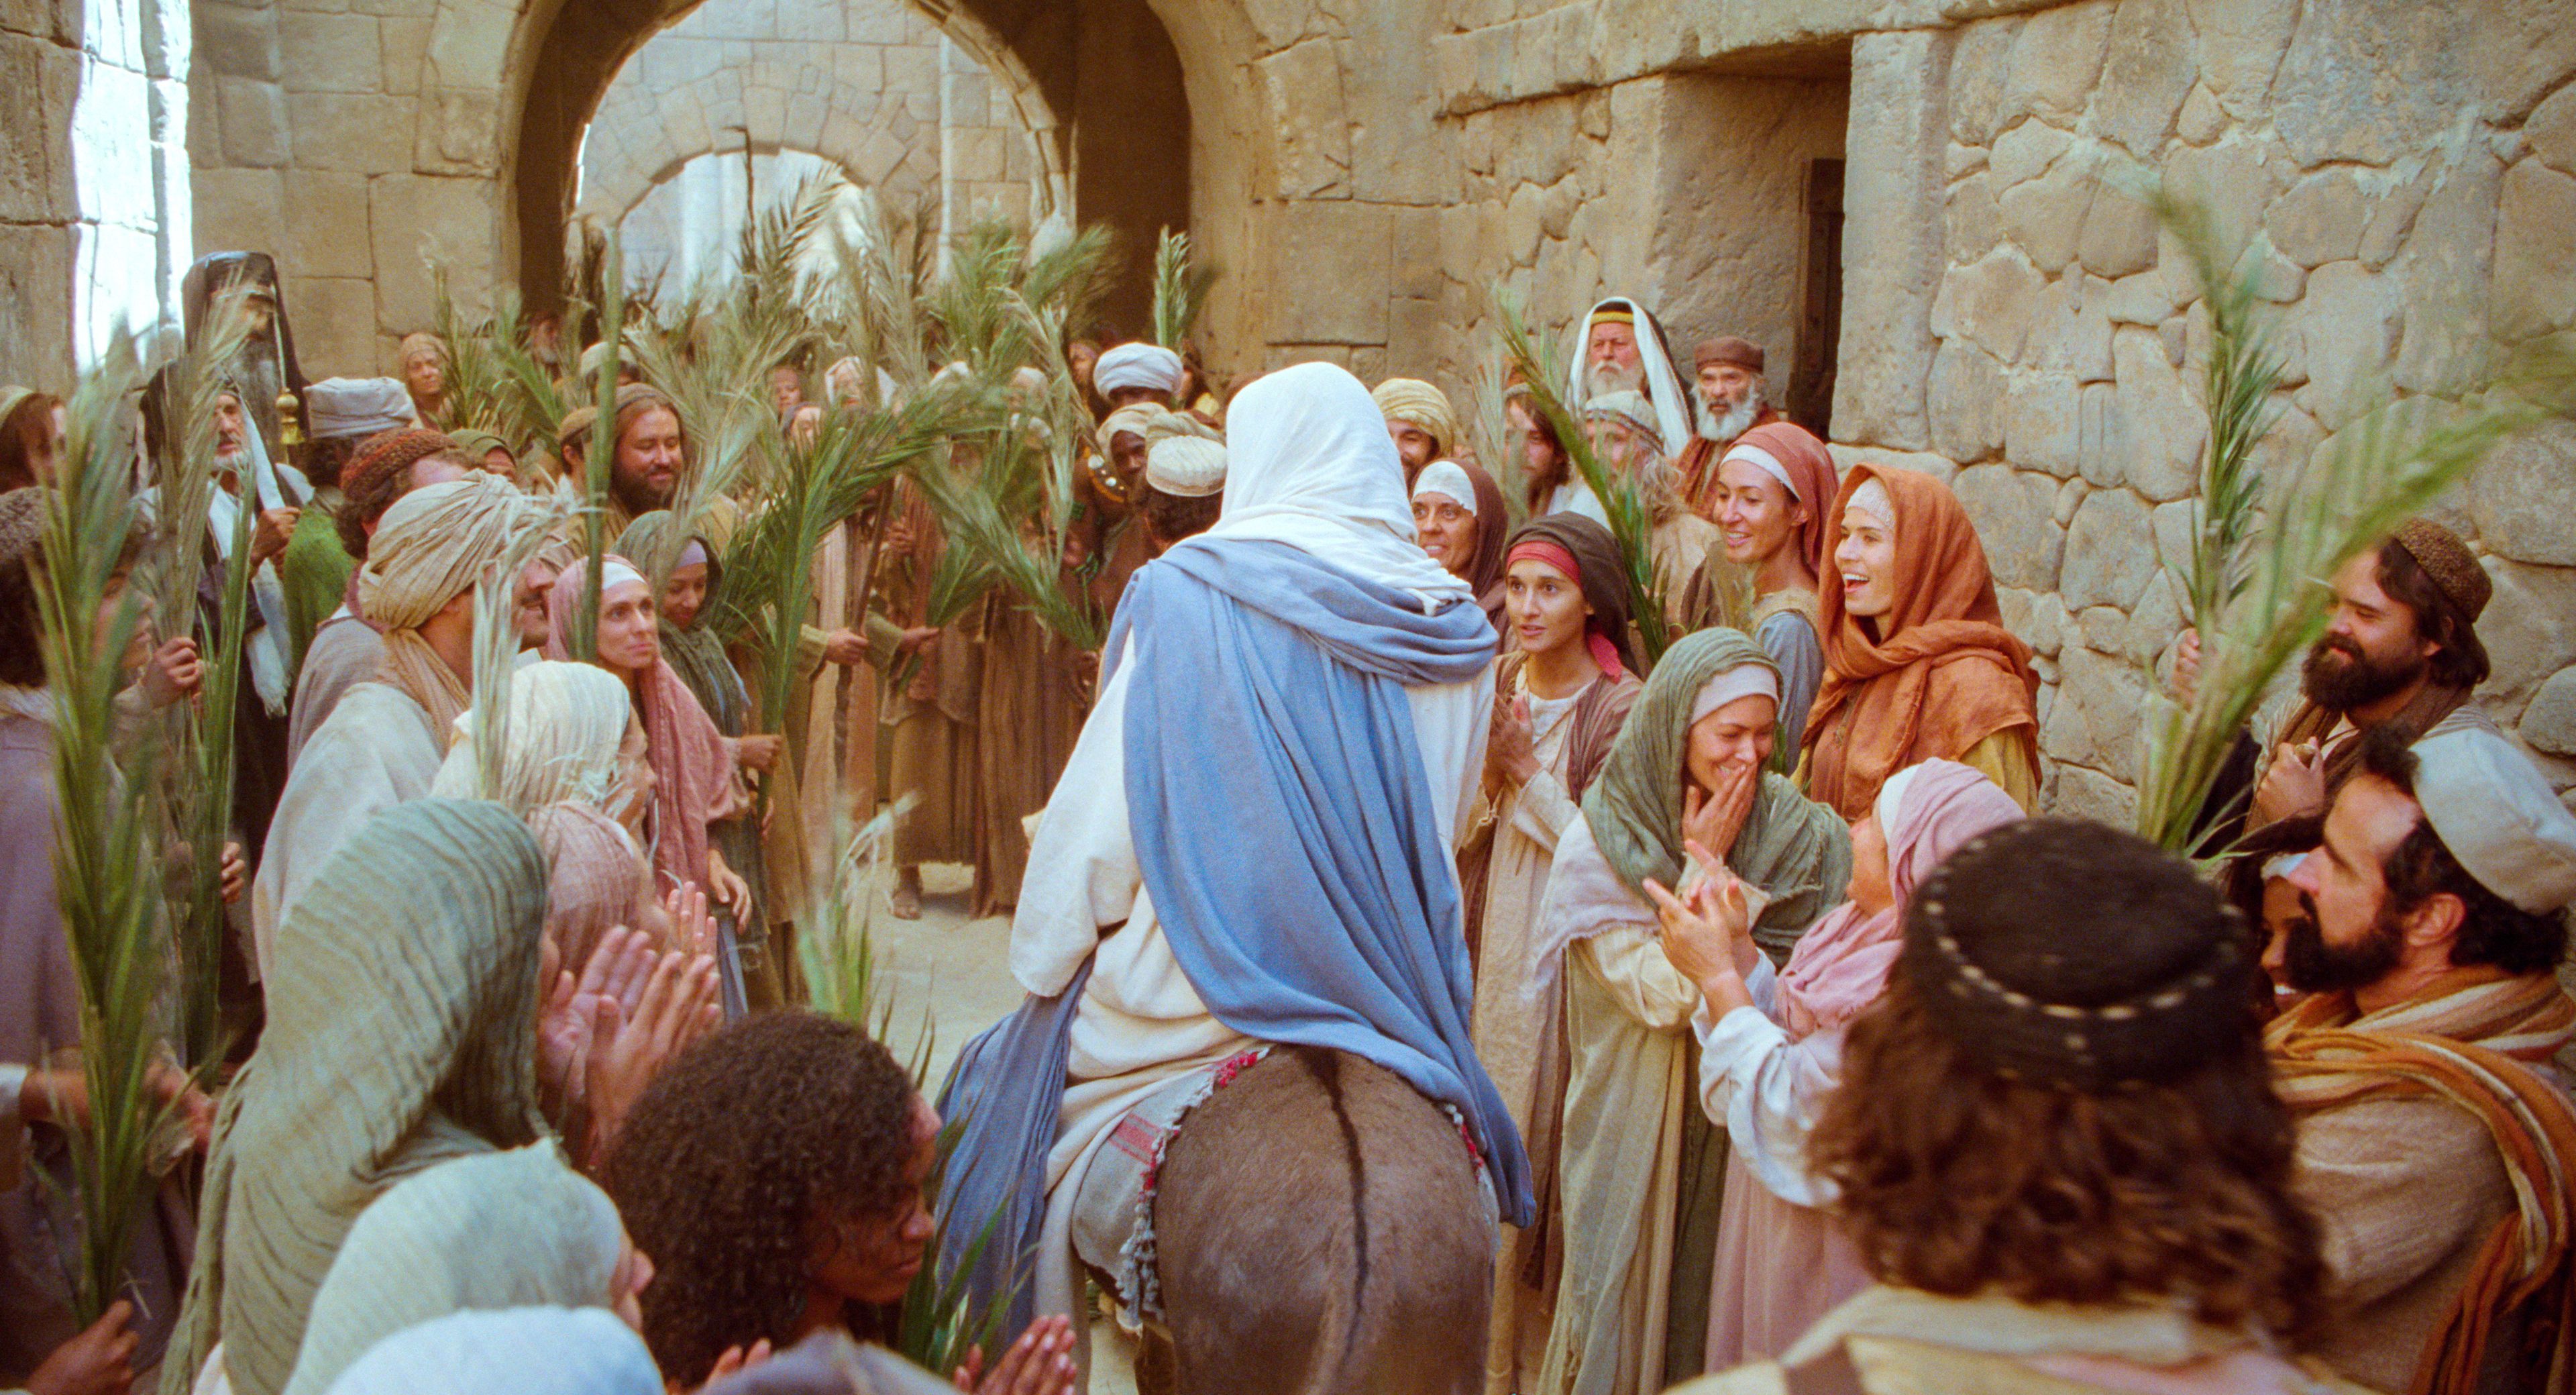 As Jesus walks through the crowds that greet him, they shout hosanna.